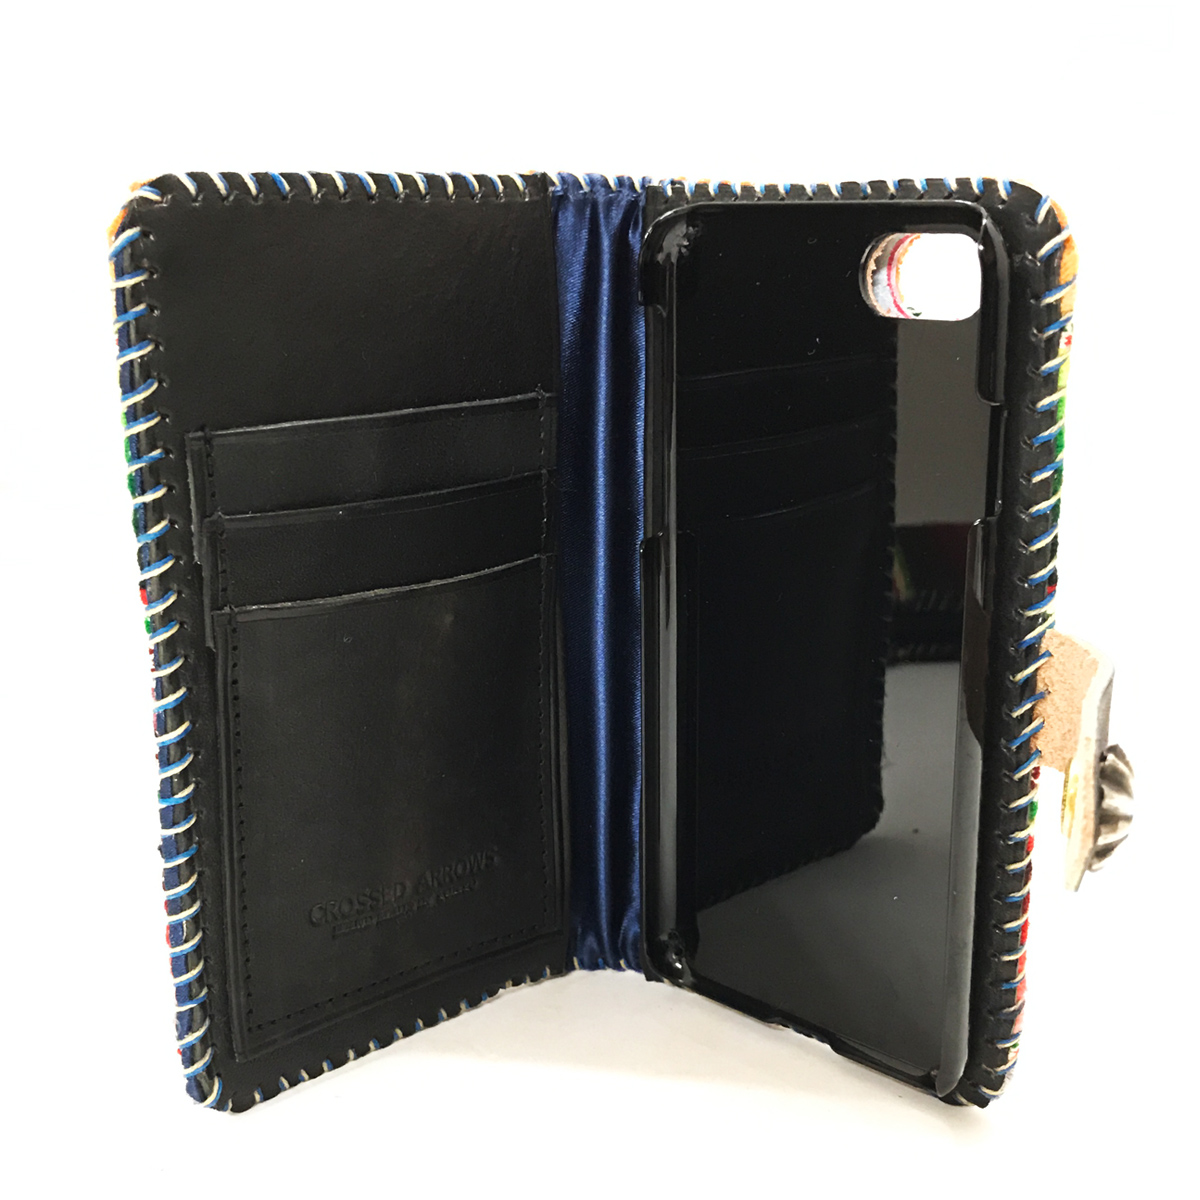 

Vintage Mexican Rag iPhone 7 case Book Flip Card Holder Case Snap